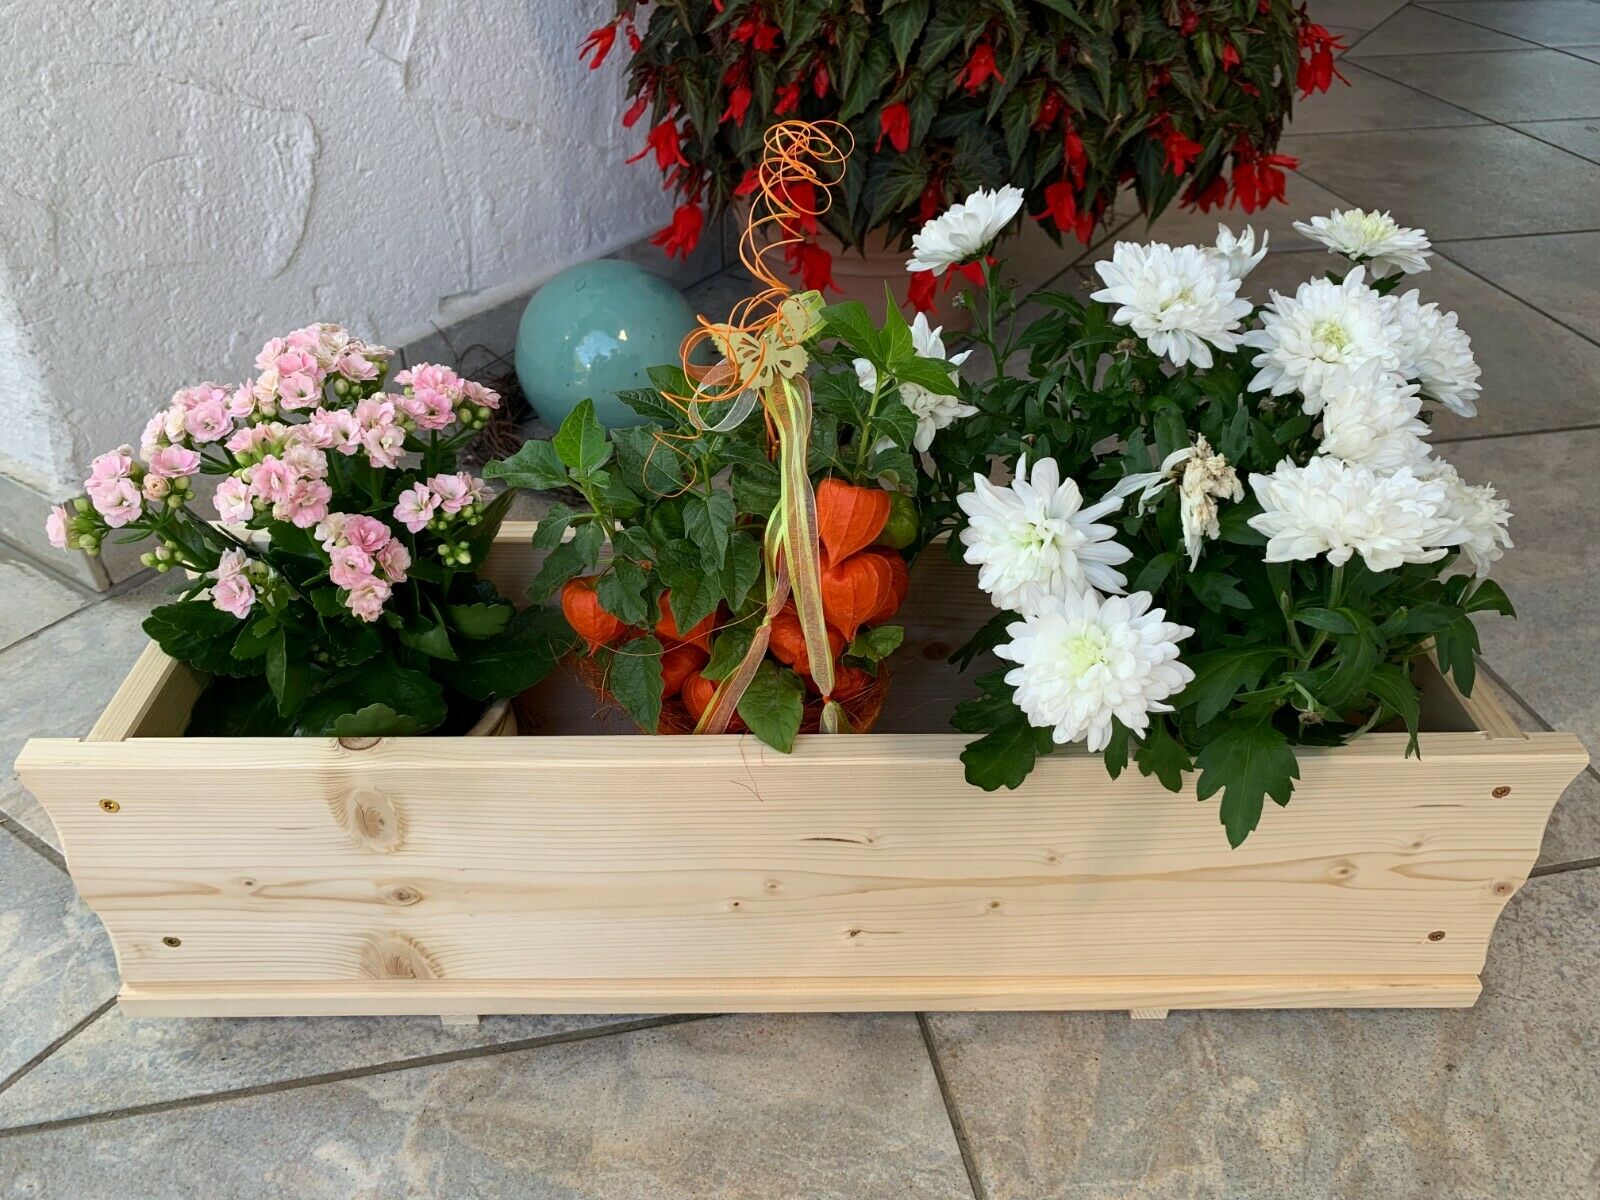 Elmato 14850 Blumenkasten Pflanzenkasten Kiste für Balkon aus Holz,  65x19x16cm - BAVARIA - Holzland